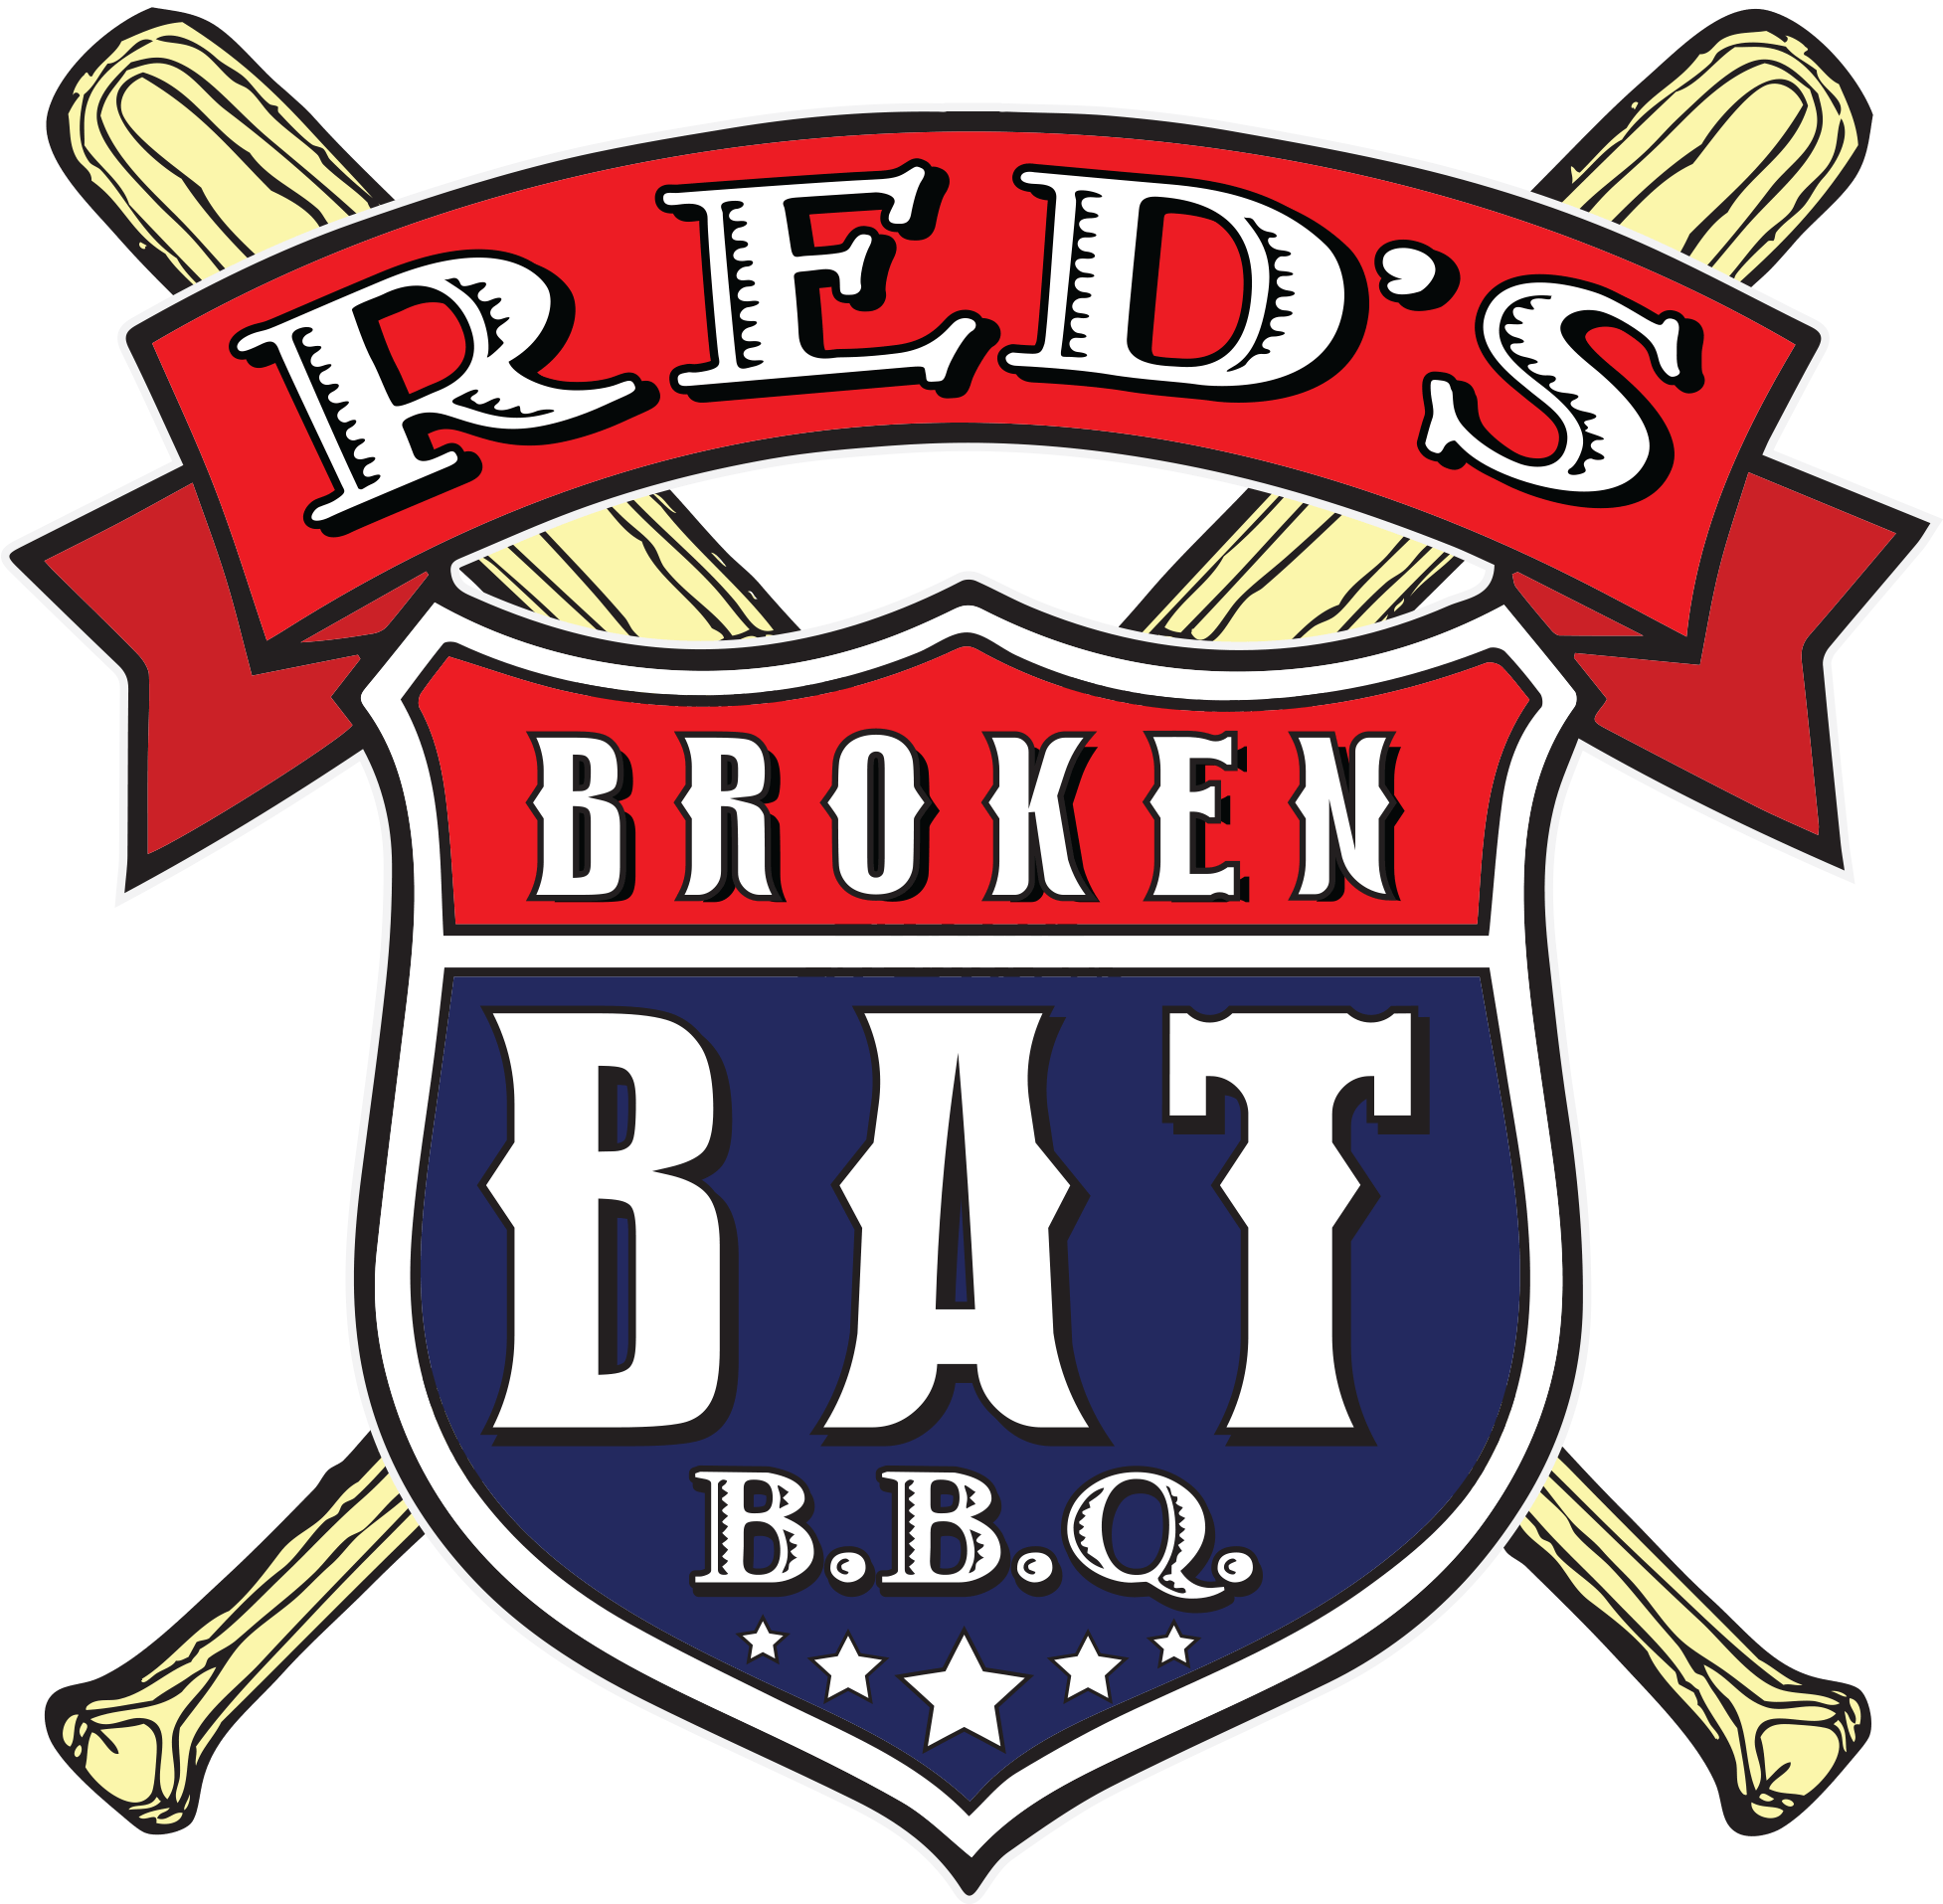 Broken Bat Logo - Red's Broken Bat B.B.Q. – World Famous Fare